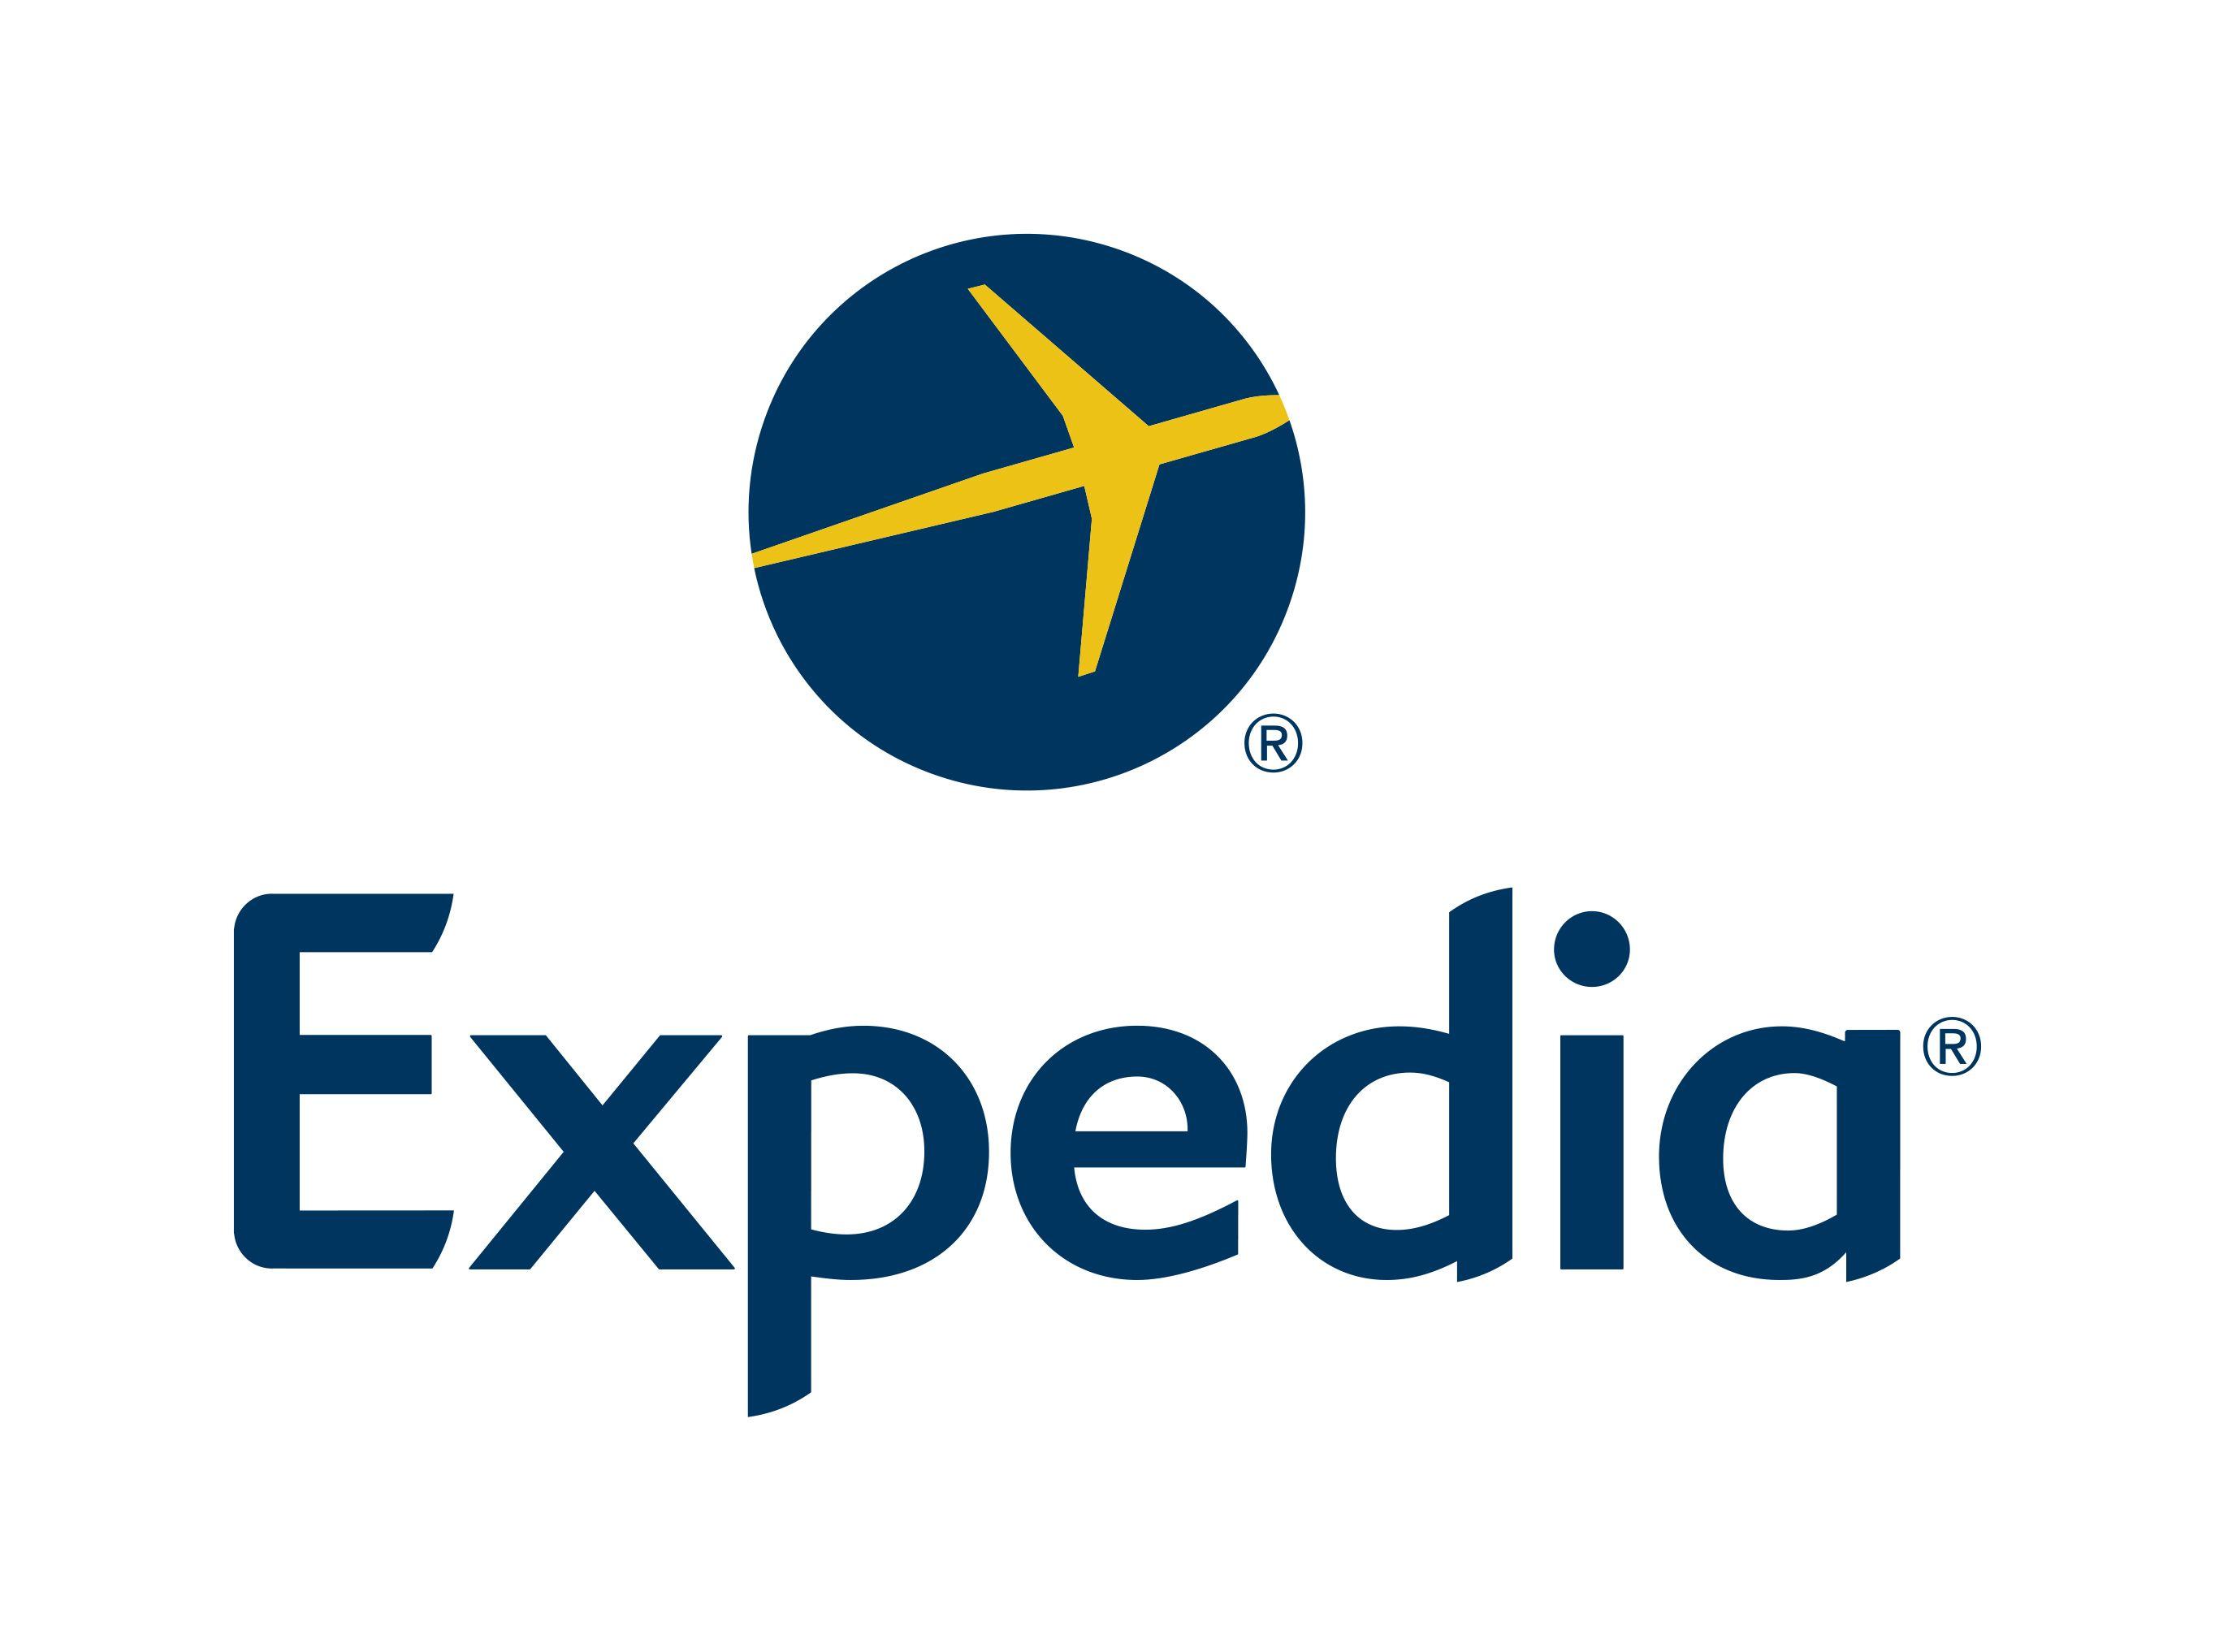 Expidia Logo - Expedia Logo's Place Bonaire